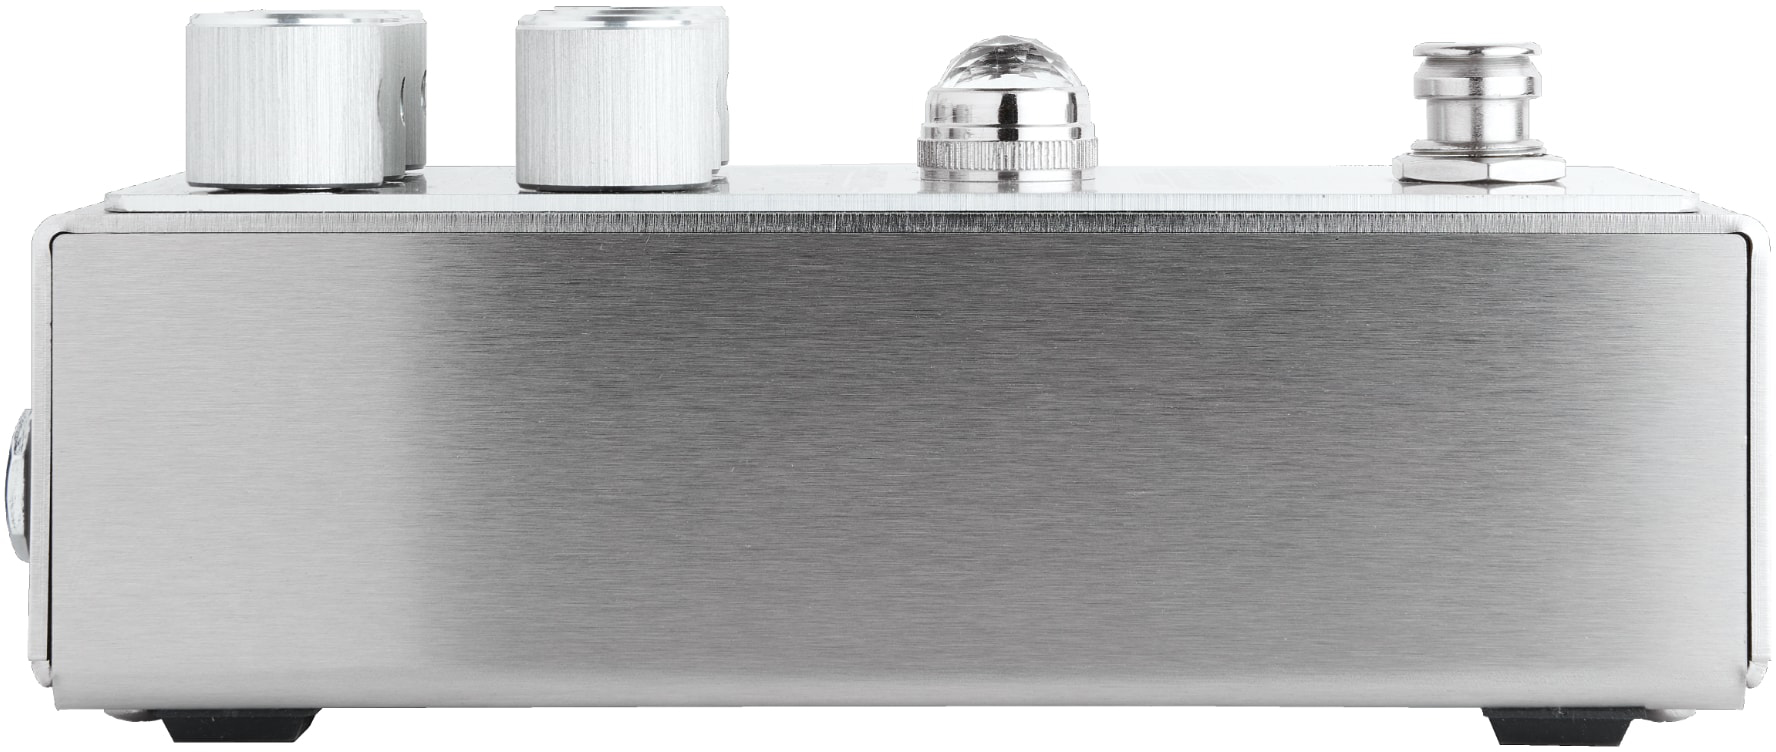 Origin Effects Cali76 Compact Deluxe Laser Engraved Ltd - Compressor, sustain & noise gate effect pedal - Variation 1